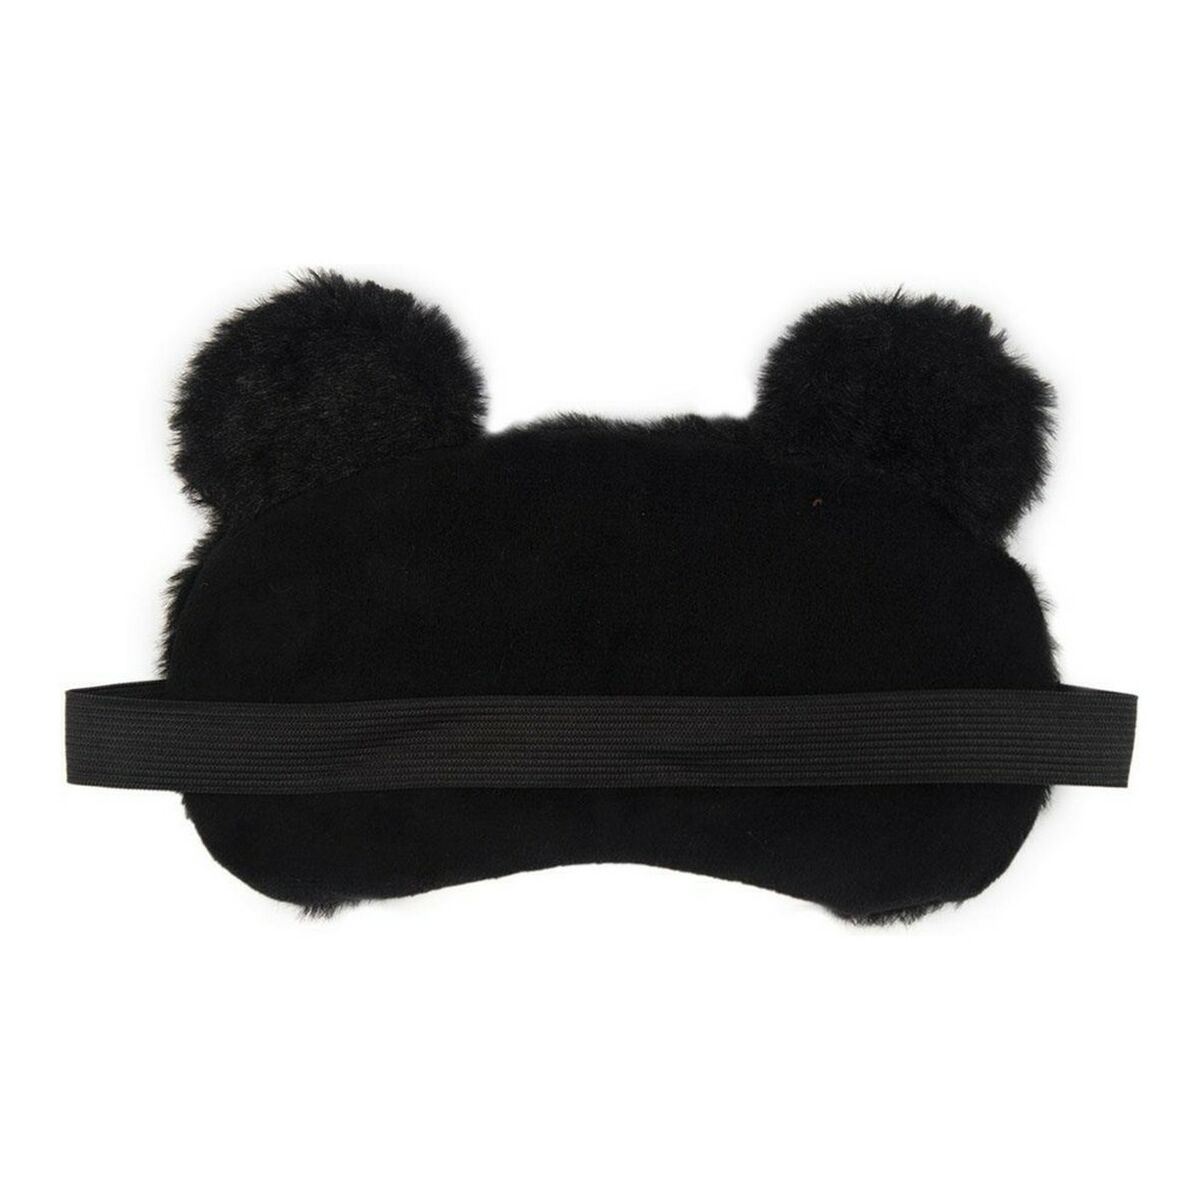 Silmaside Mickey Mouse black (20 x 10 x 1 cm)